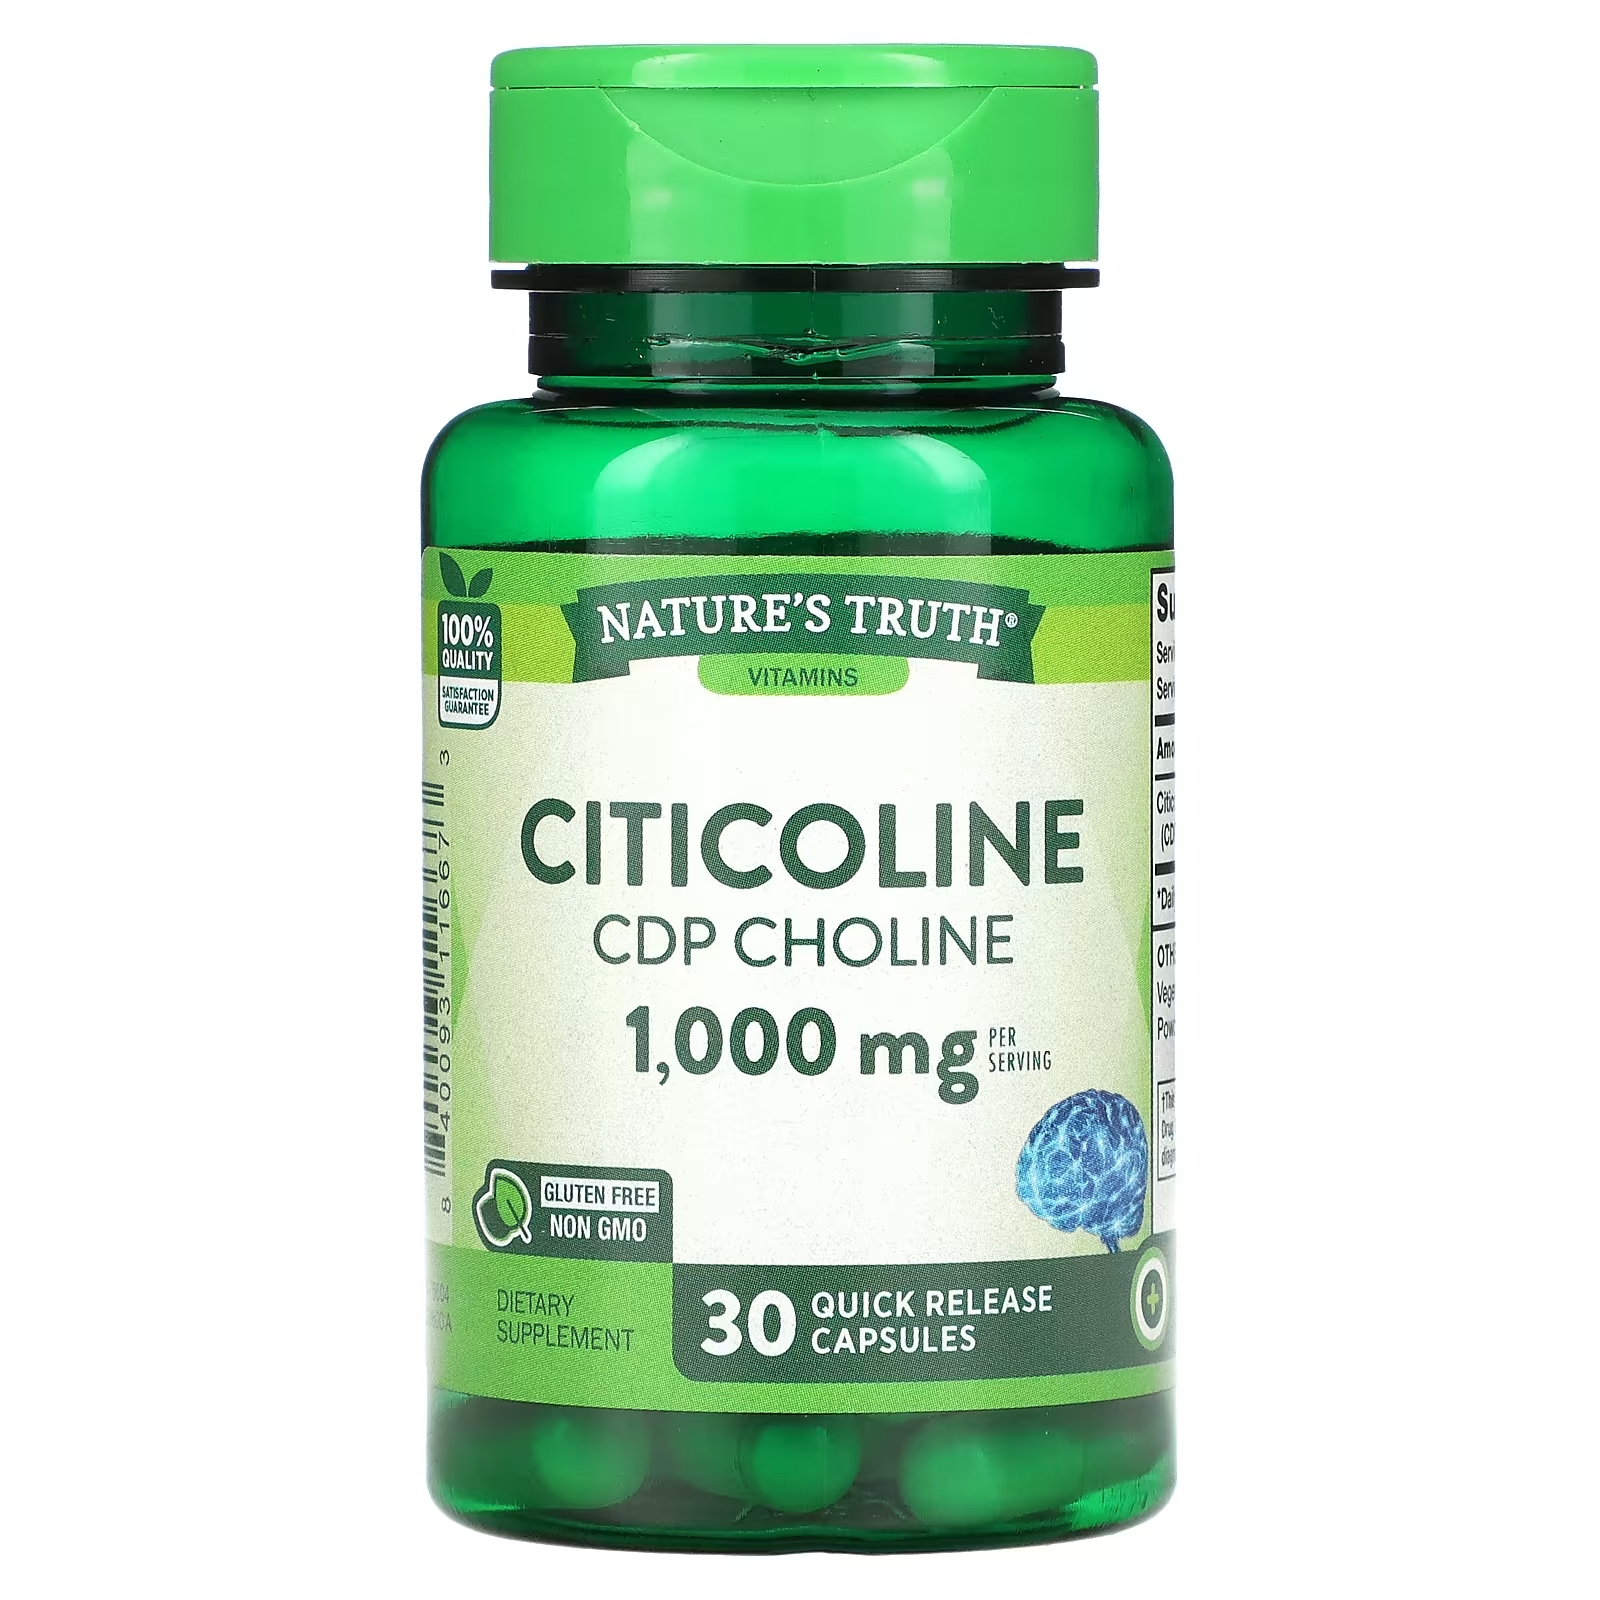 Nature's Truth Citicoline CDP Choline 1000 мг с быстрым высвобождением, 30 капсул nature s truth экстракт семян расторопши 1000 мг 100 капсул с быстрым высвобождением